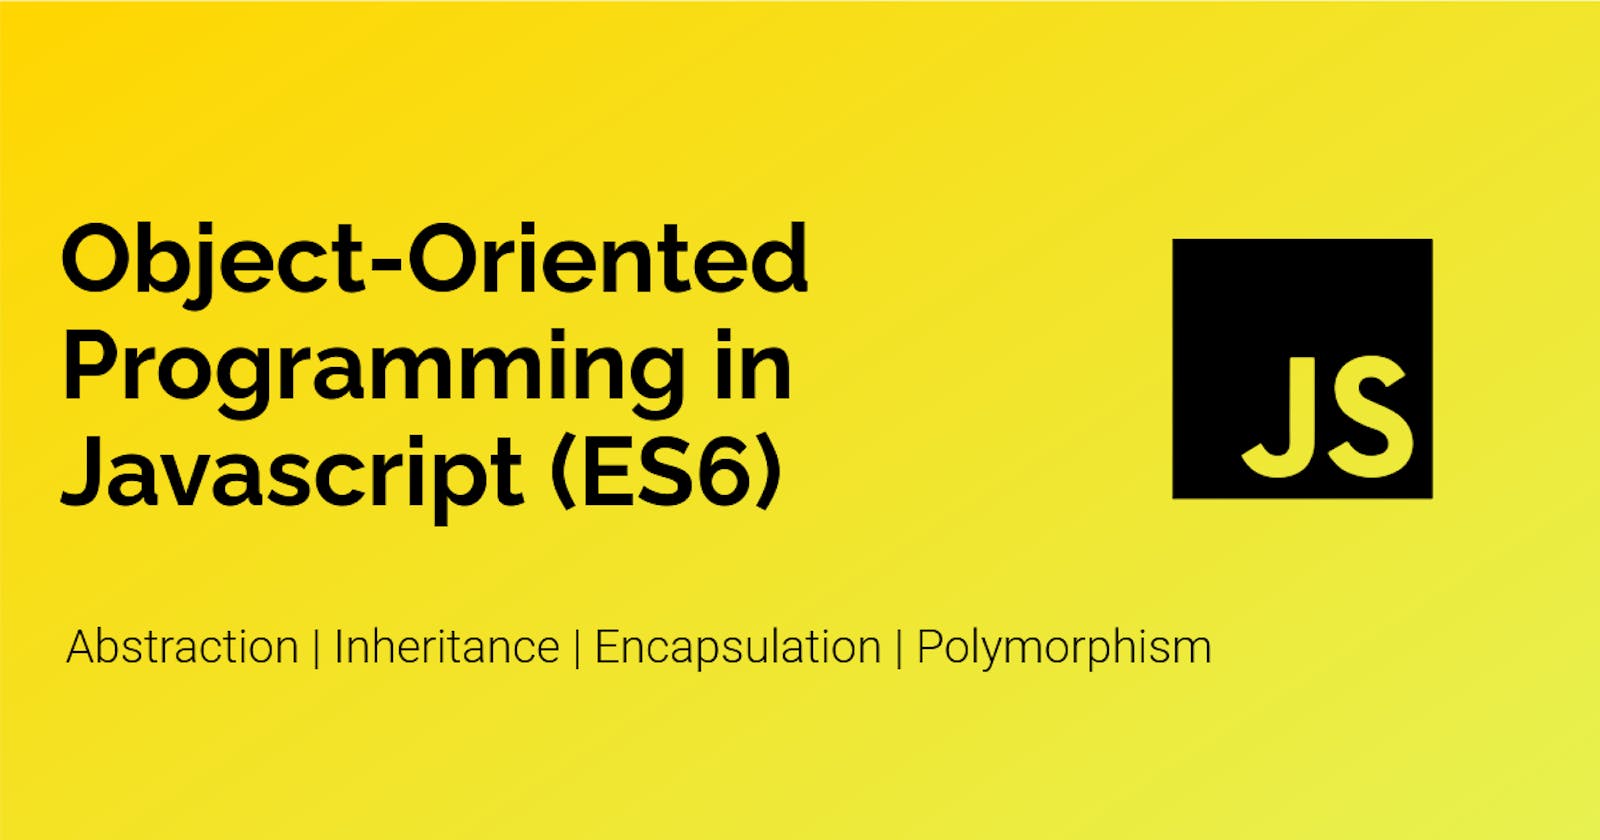 Object-Oriented Programming in Javascript (ES6)